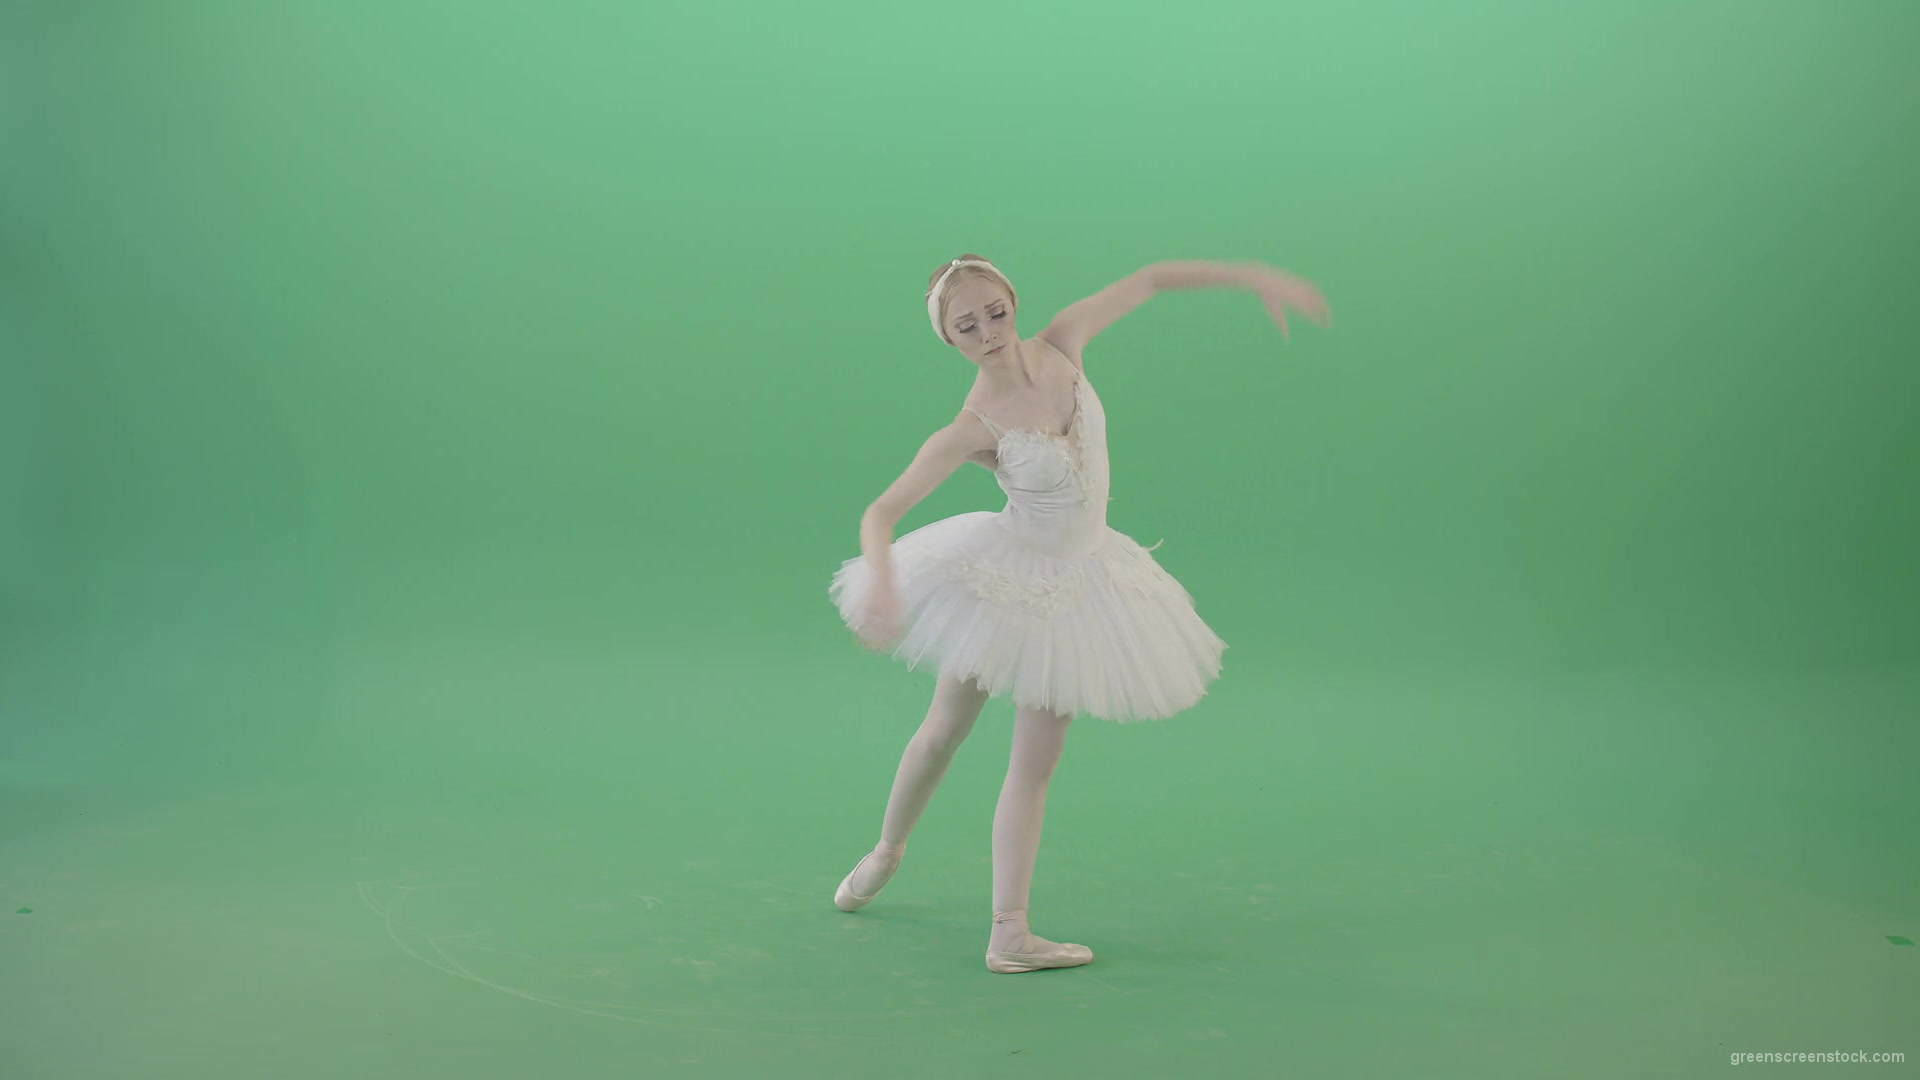 Elegant-snowwhite-ballet-dancer-ballerina-dancing-isolated-on-Green-Screen-4K-Video-Footage-1920_007 Green Screen Stock